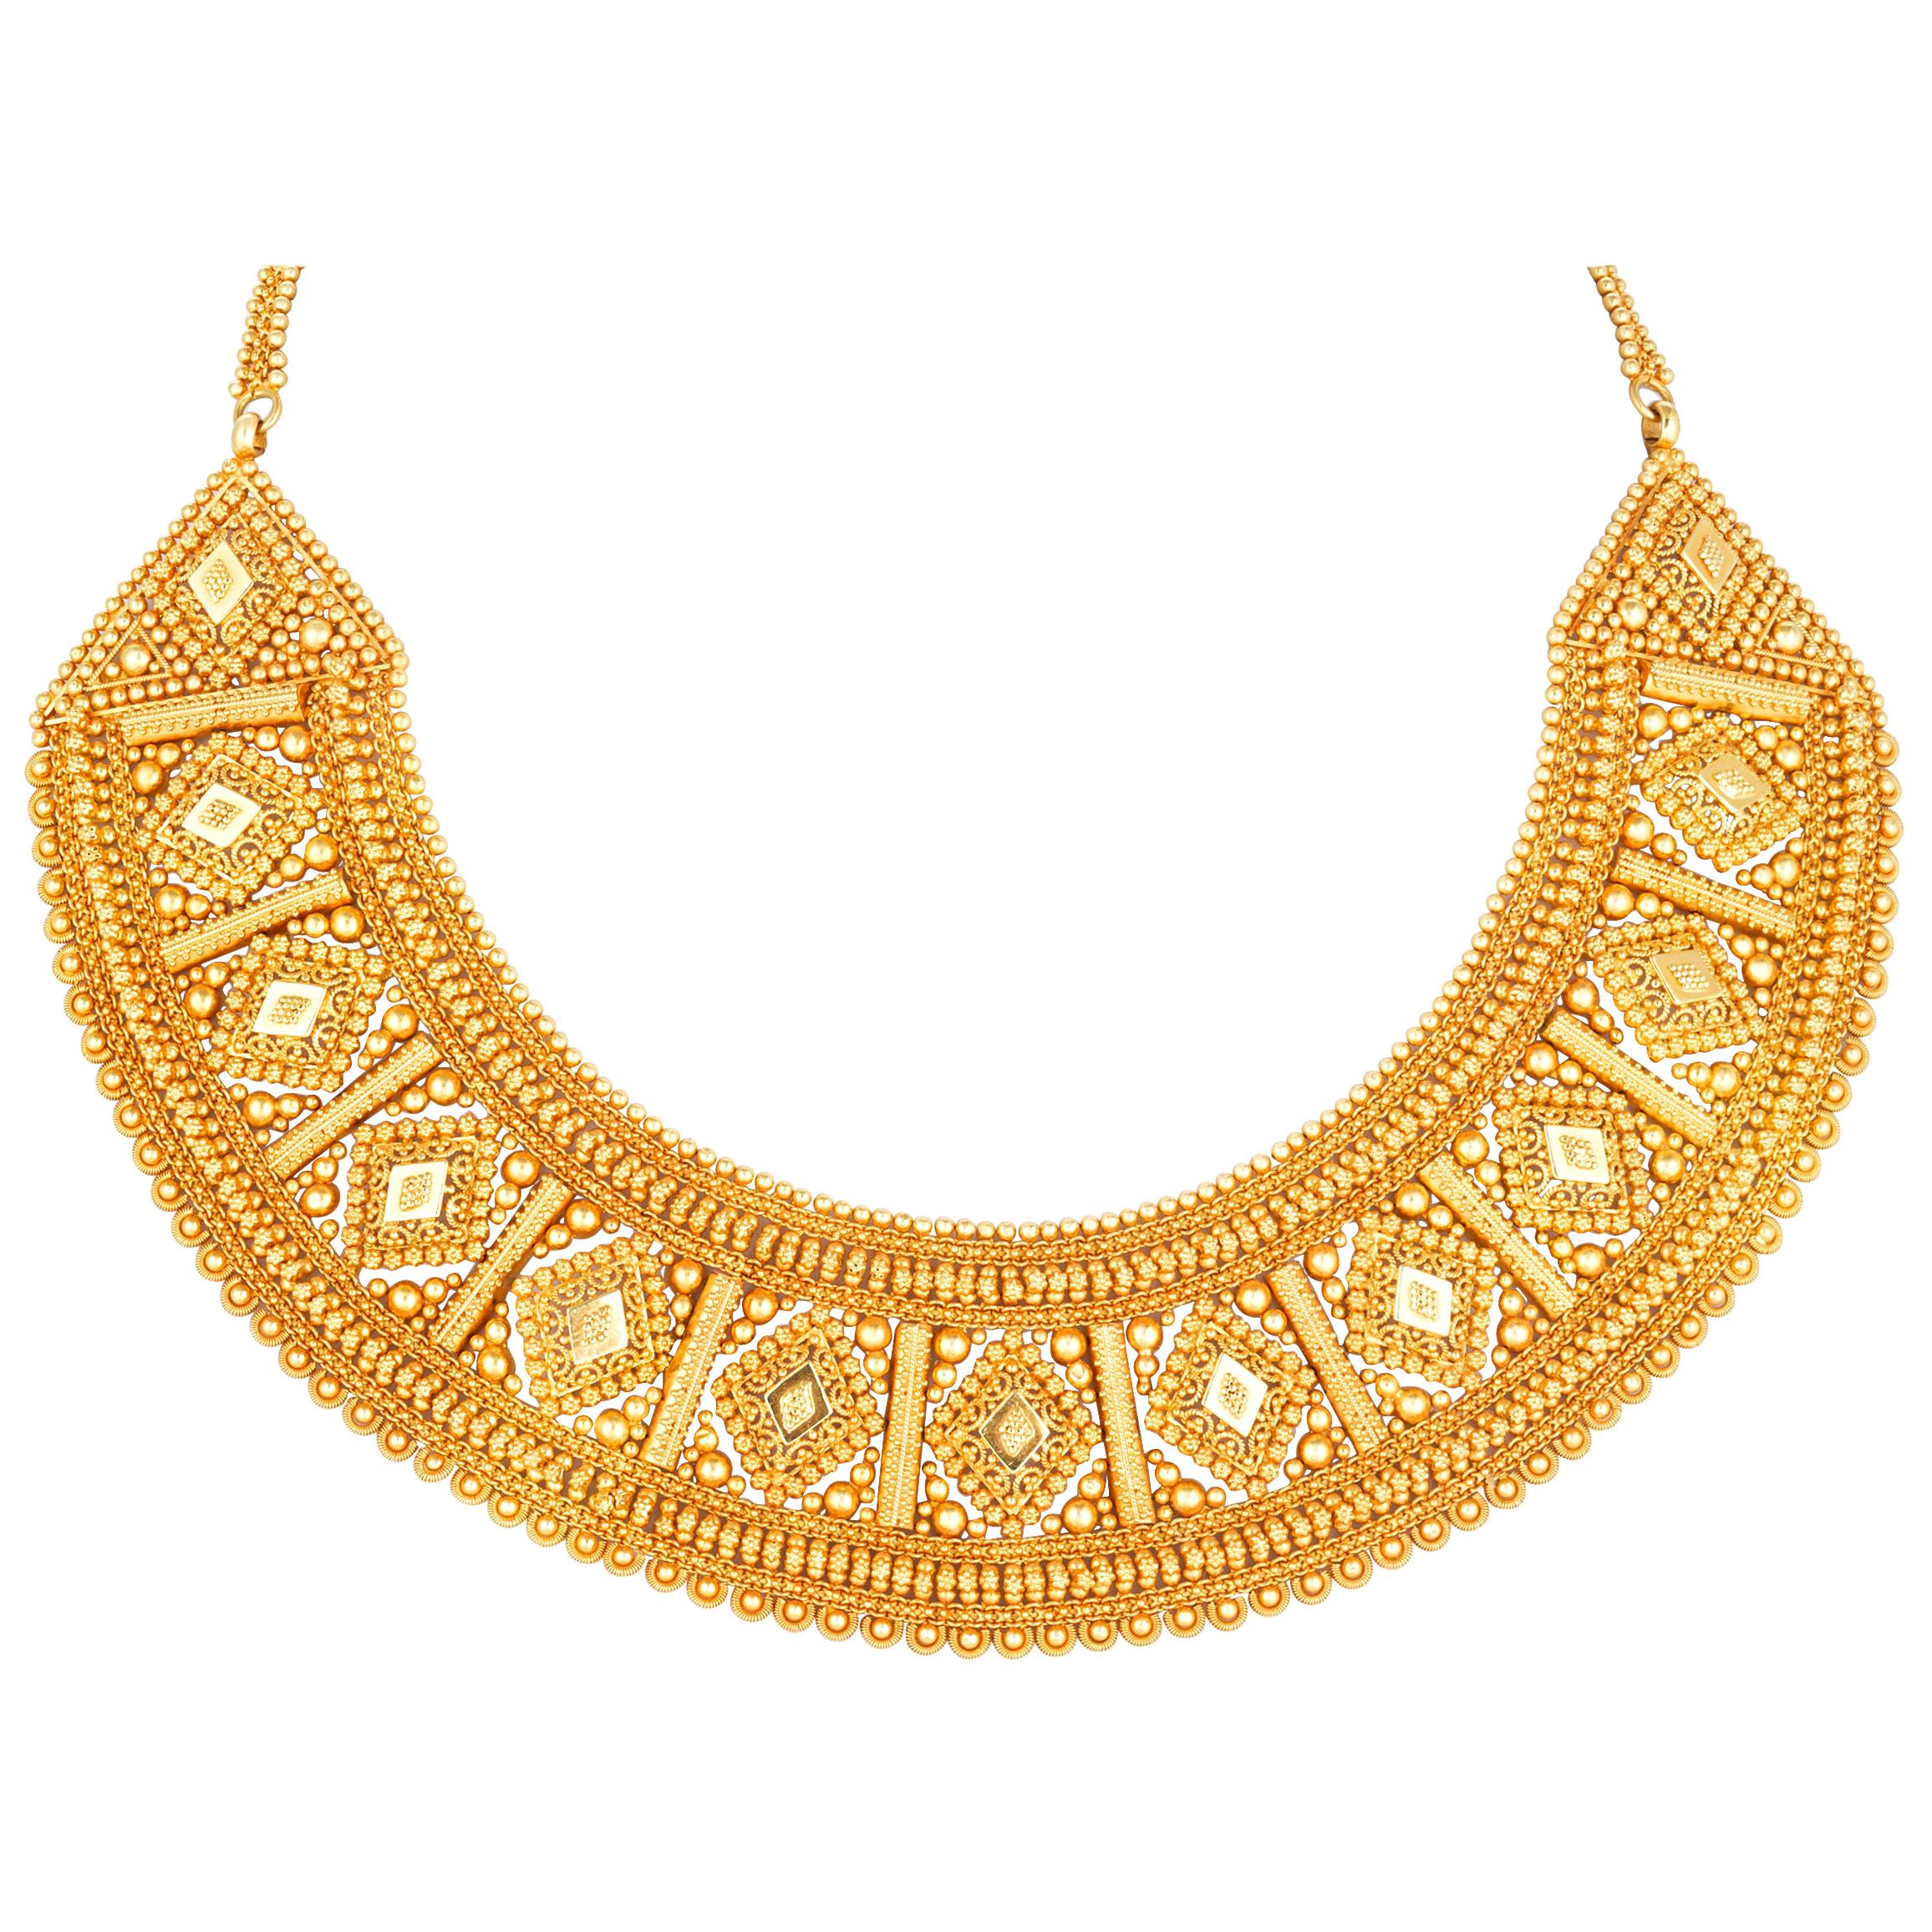 KAMAL Egyptian style gold necklace